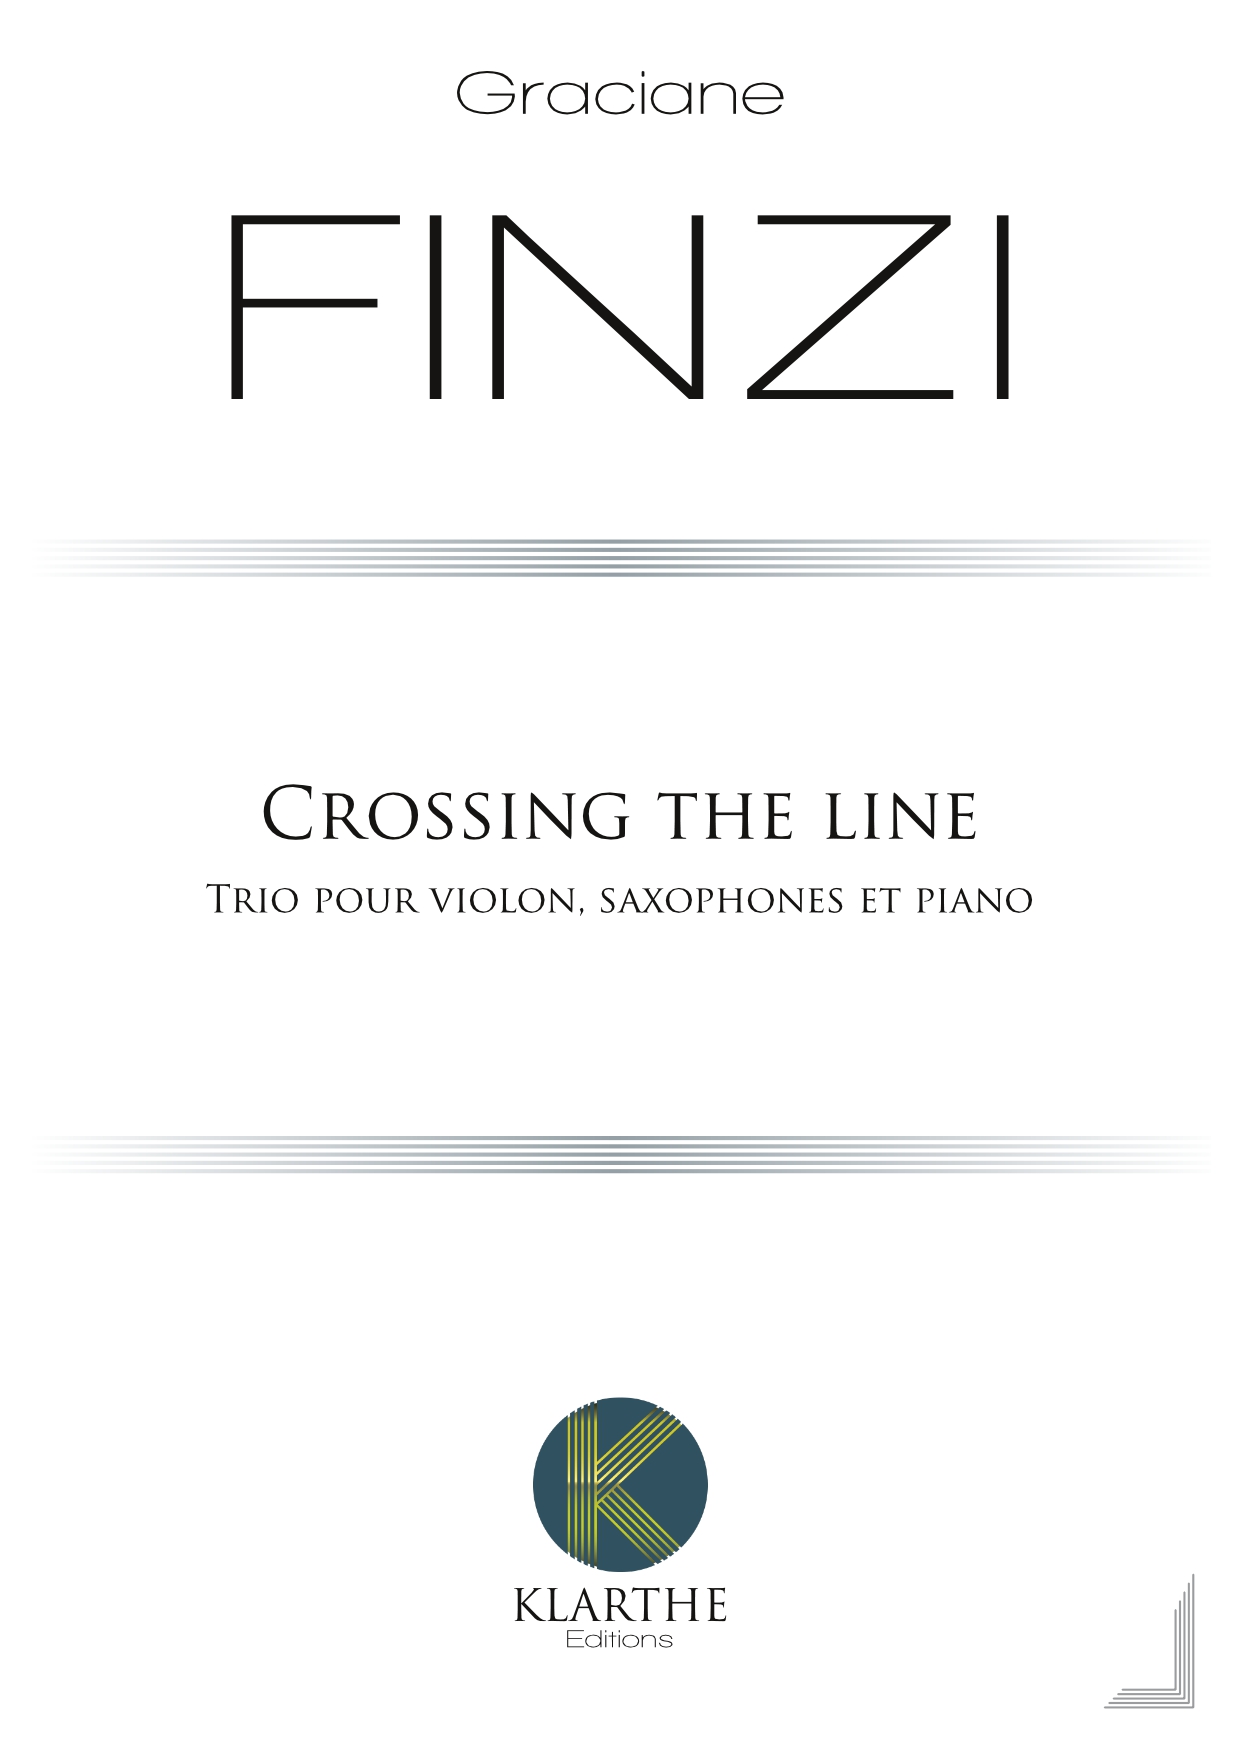 Crossing the line (FINZI GRACIANE)